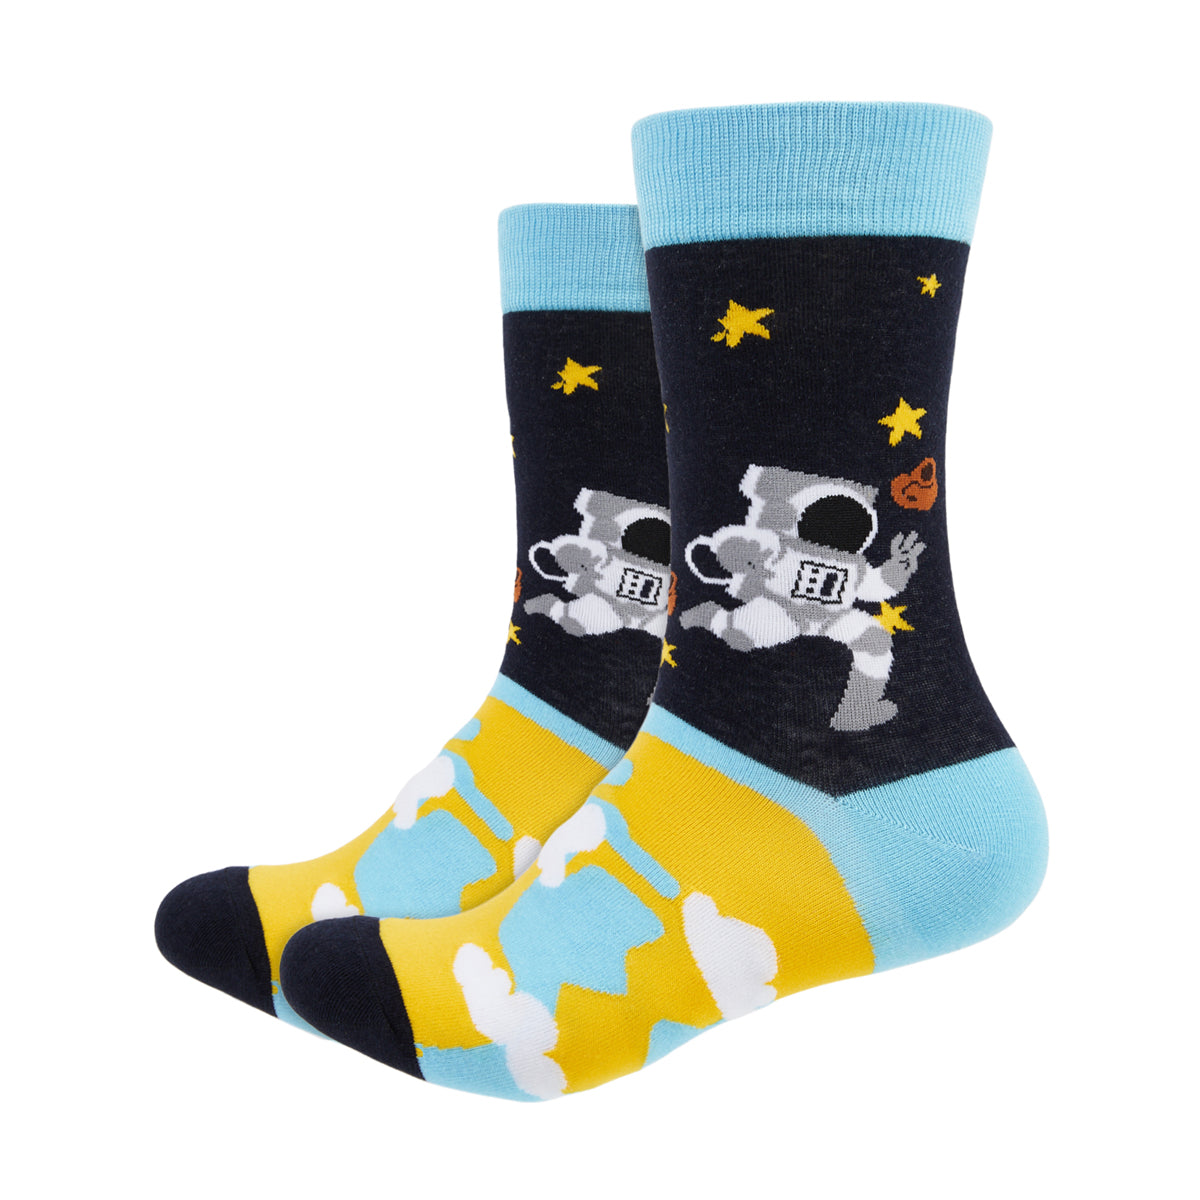 Space Explorer Printed Crew Length Socks - IDENTITY Apparel Shop